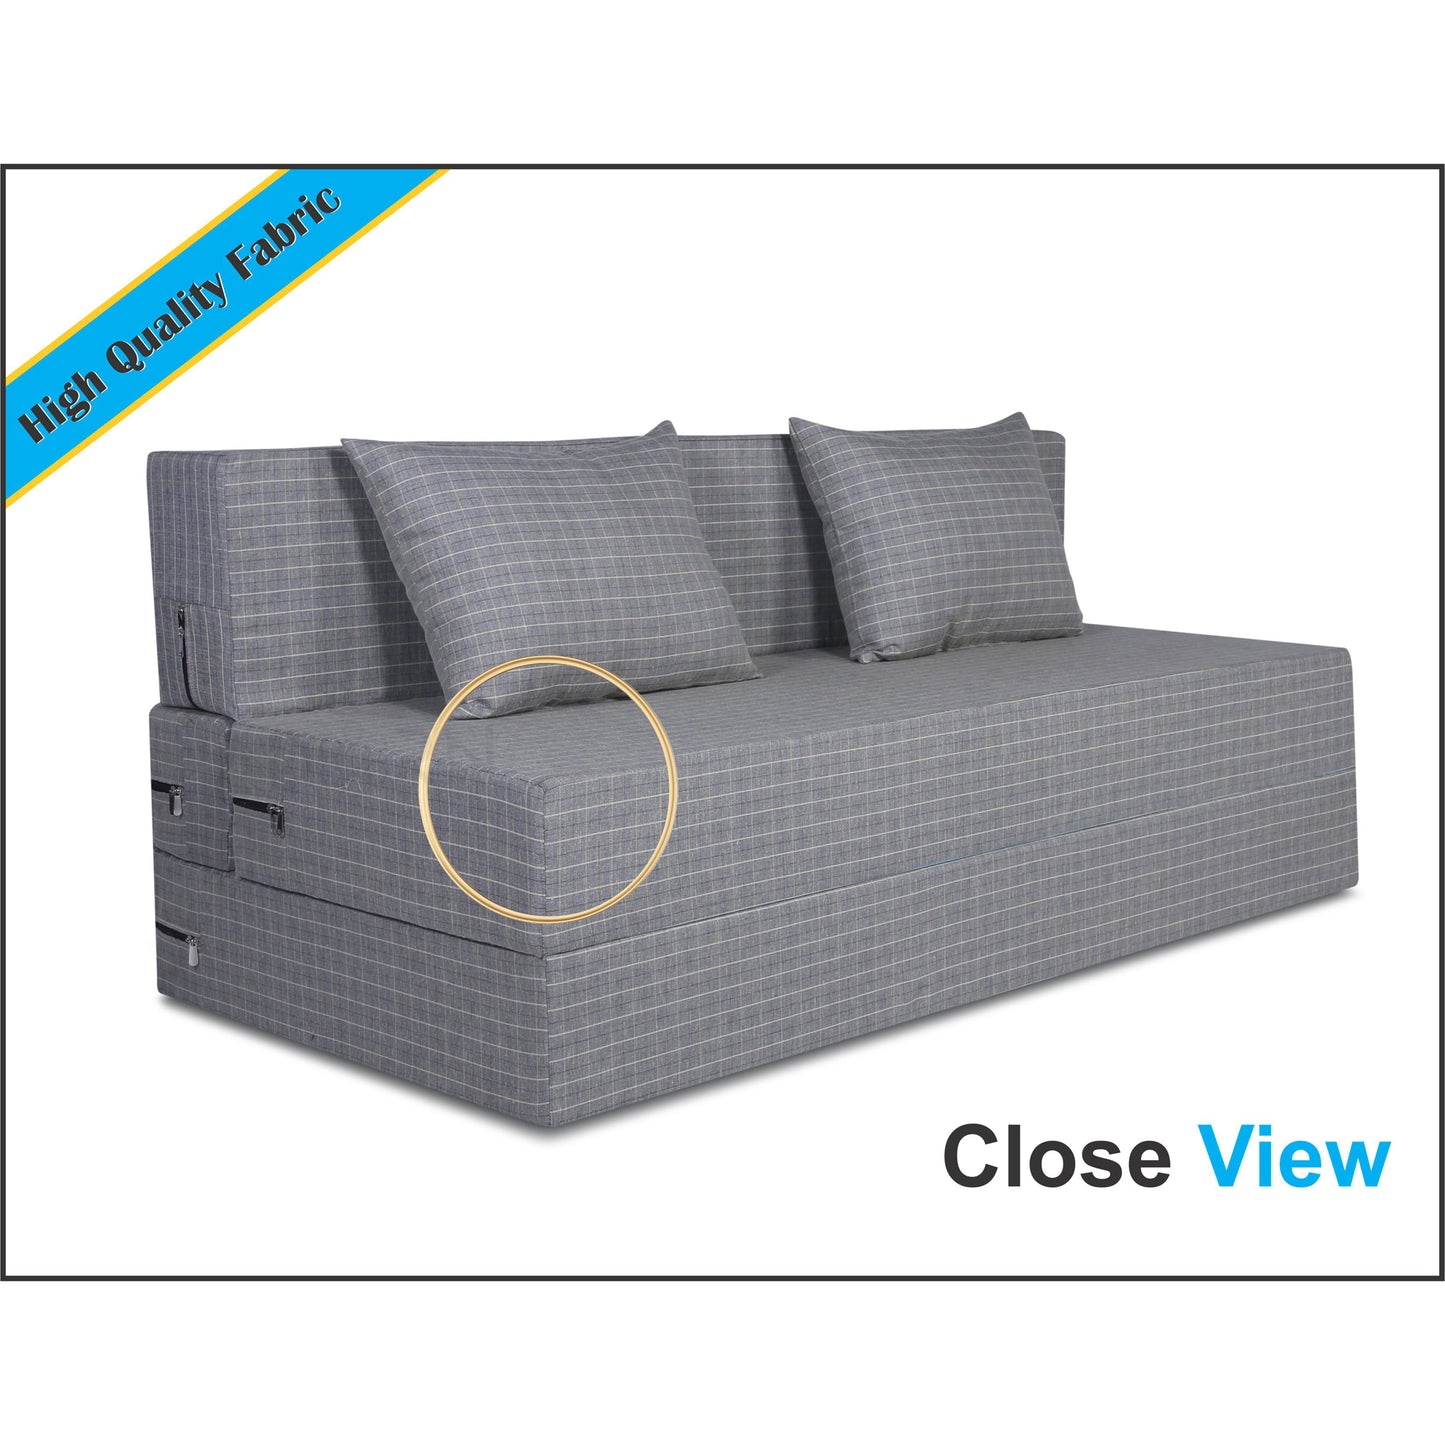 Adorn India Easy Two Seater Sofa Cum Bed Checks Design 4' x 6' (Beige)